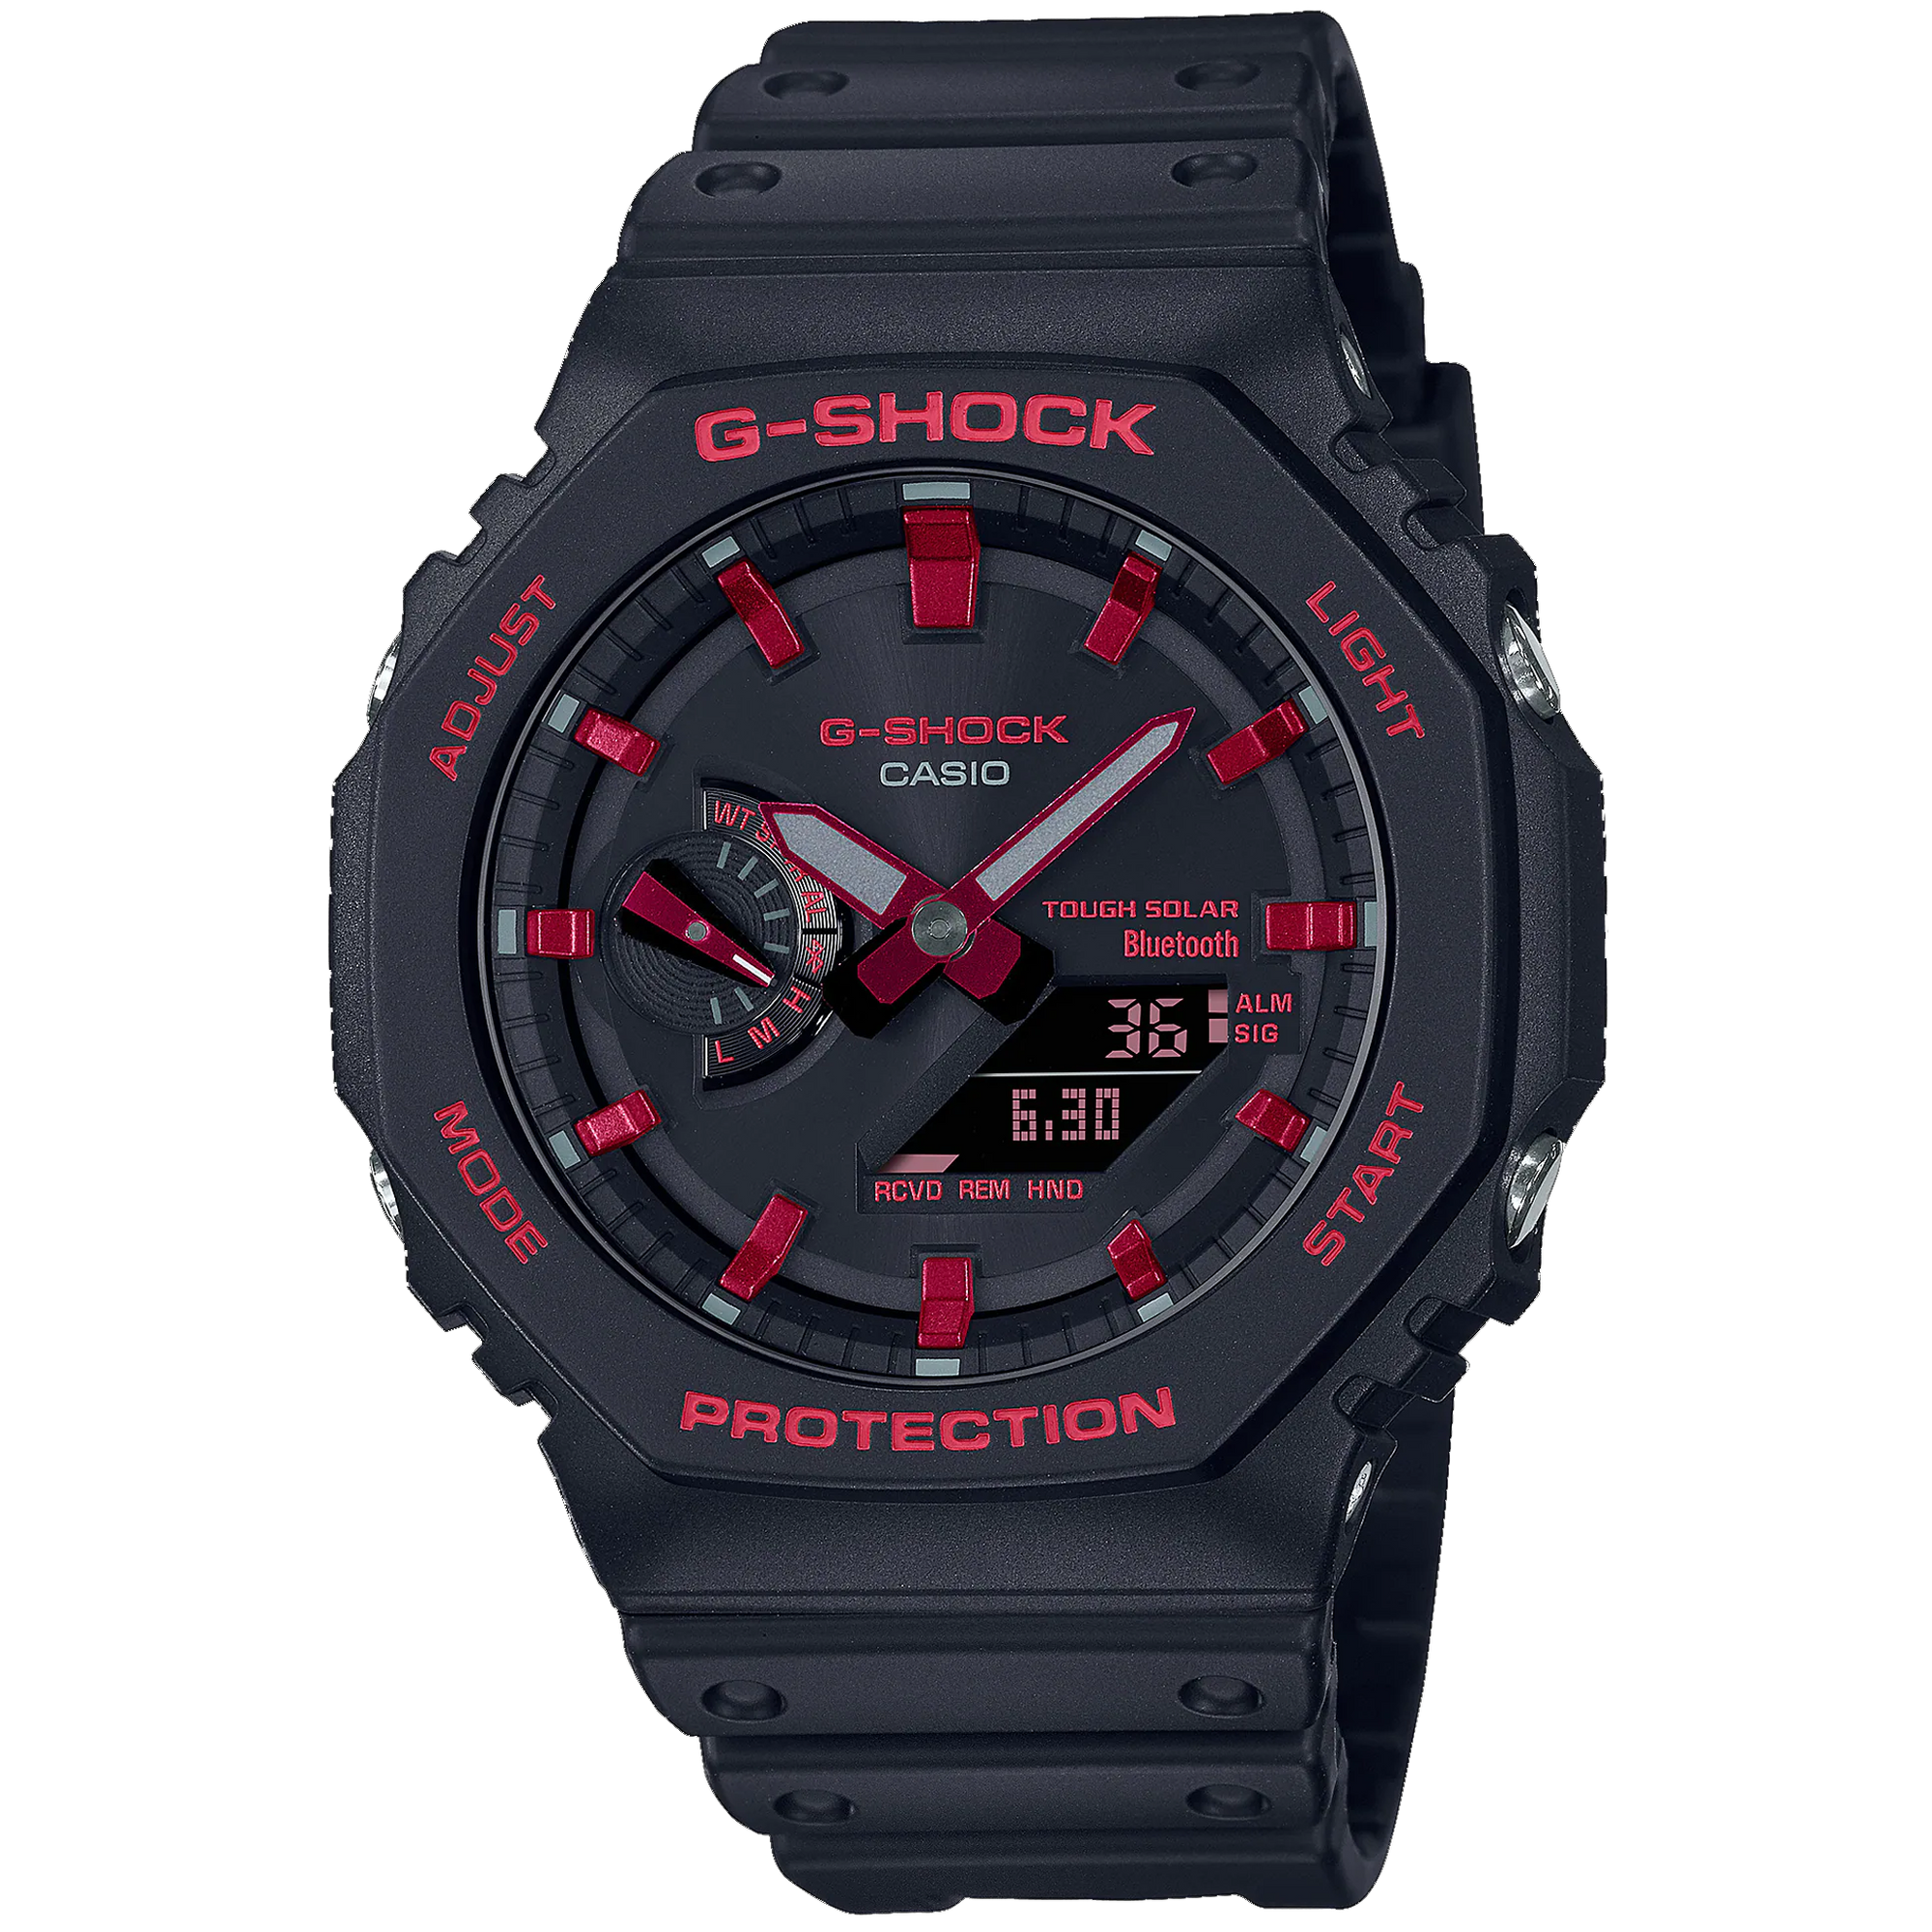 Casio G-Shock - At The Halifax Watch Company - g-shock - g-shock